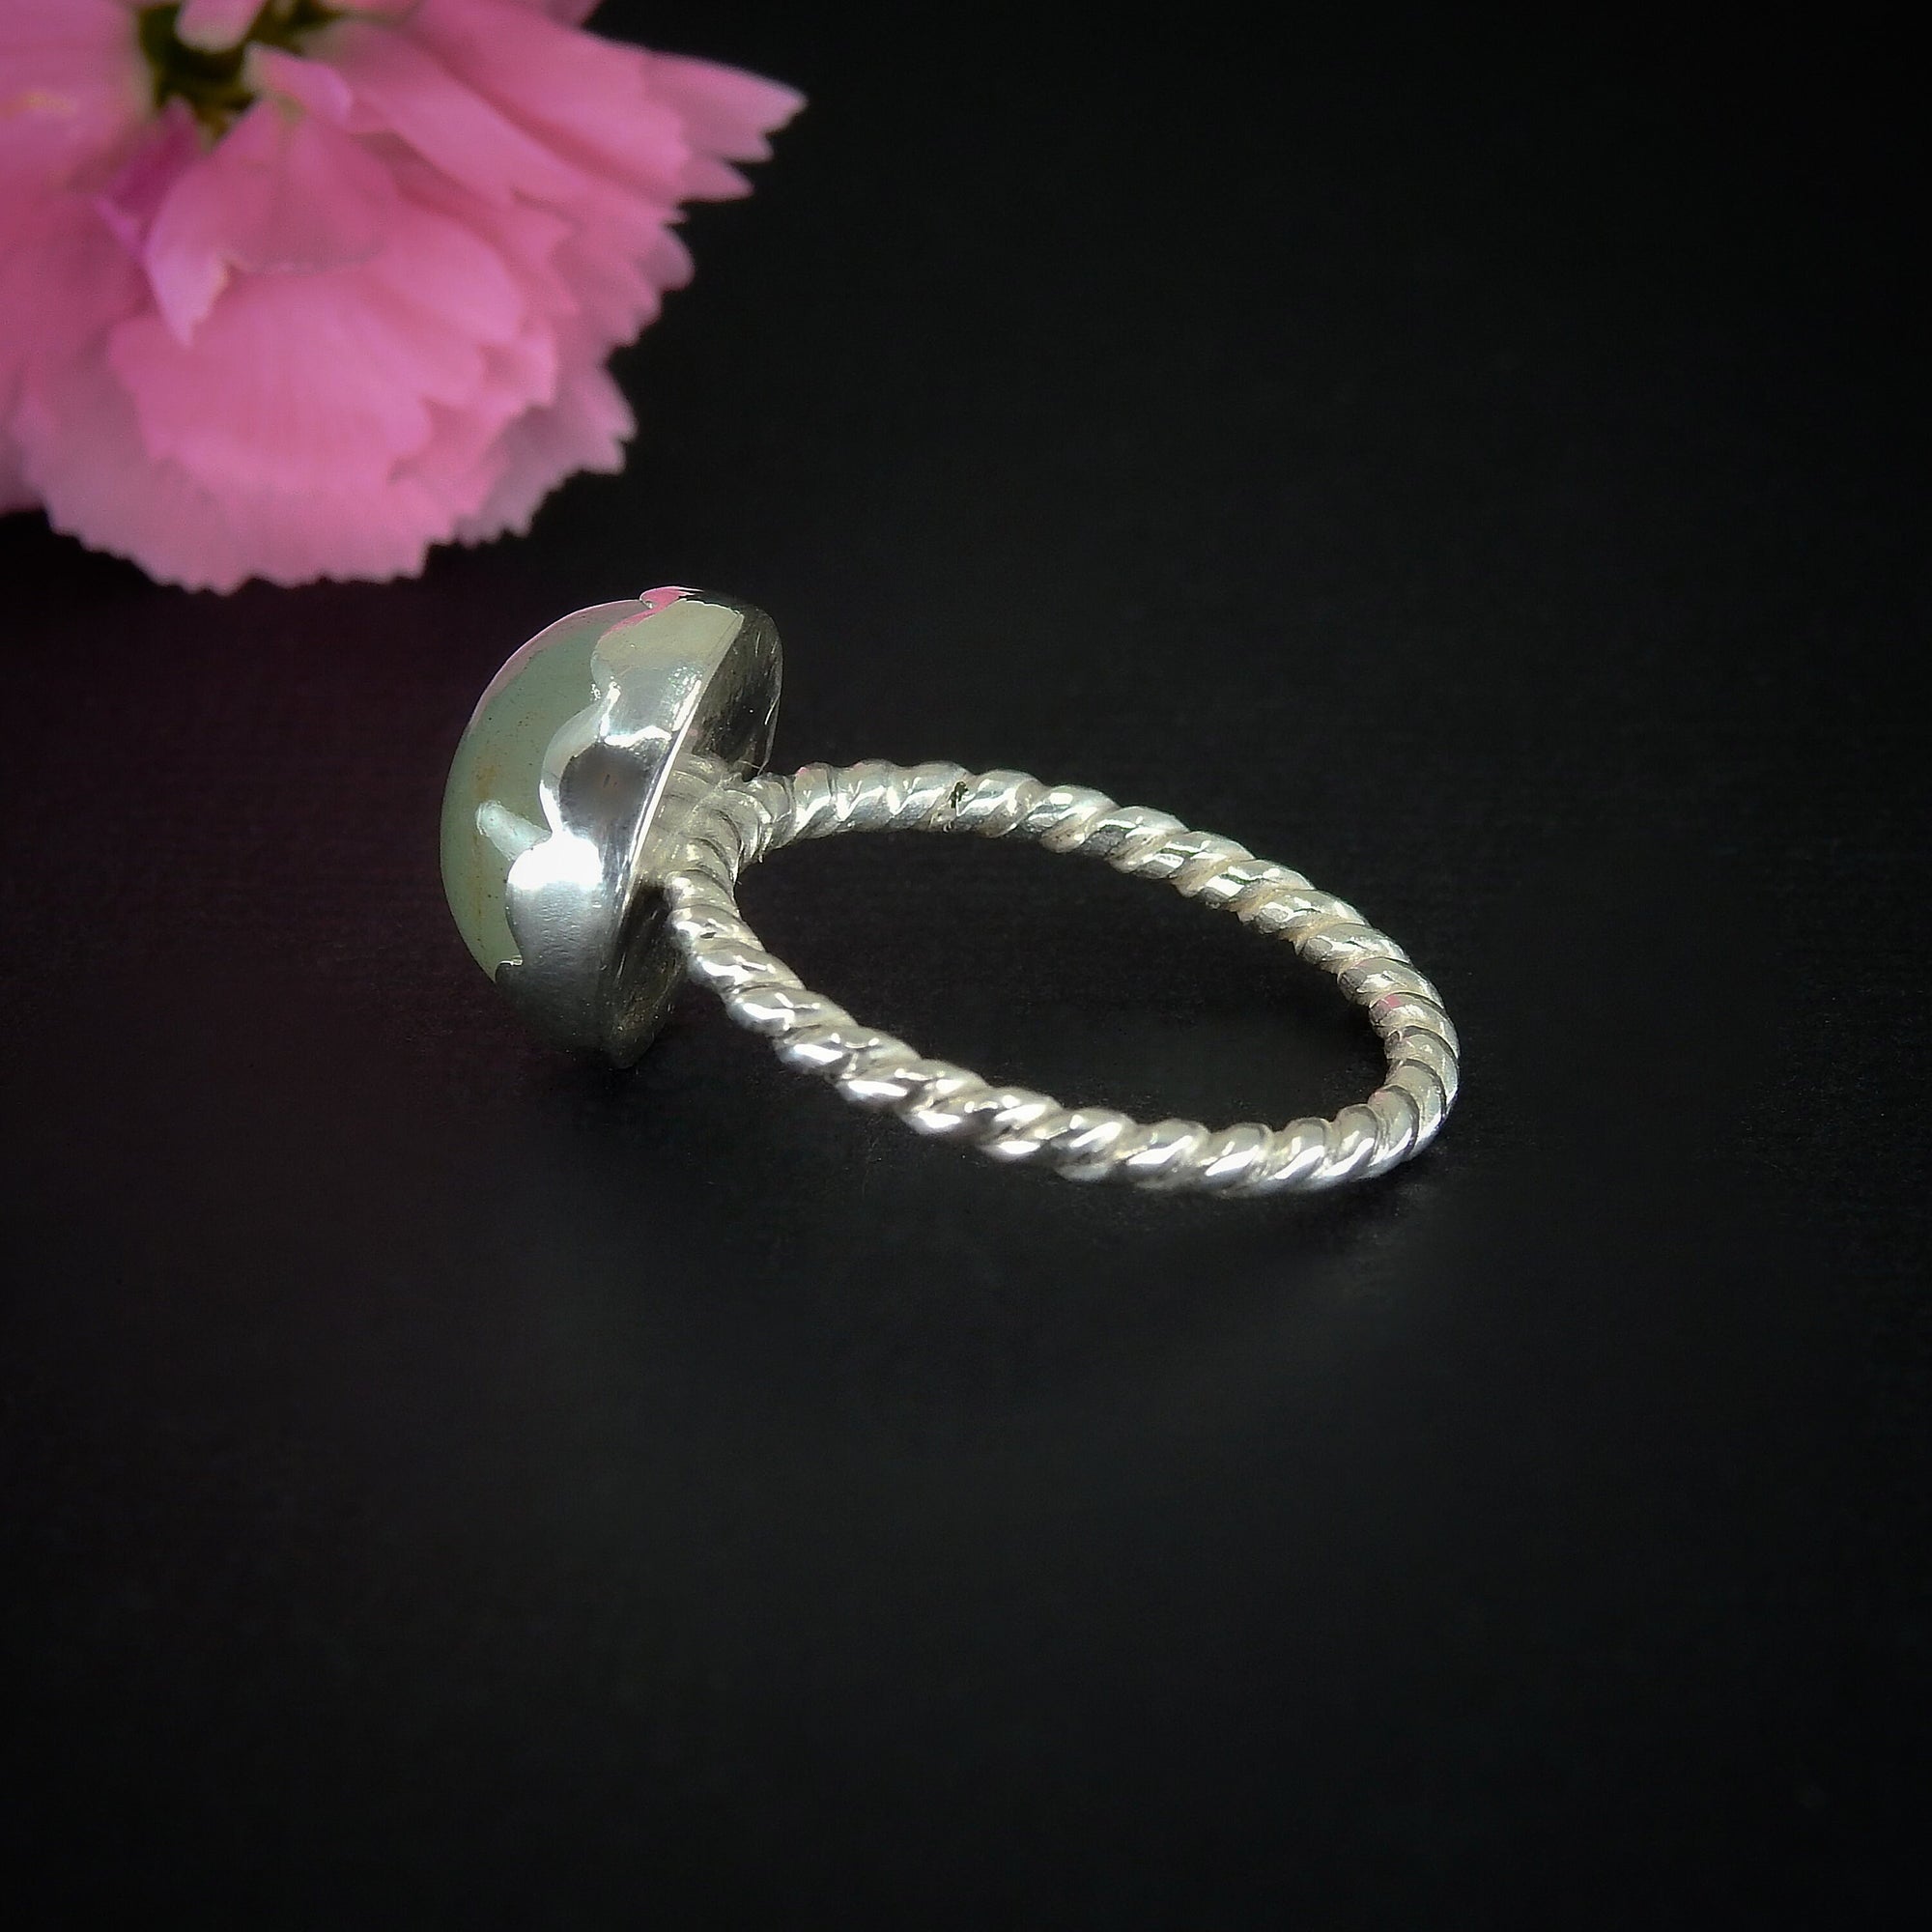 Aquamarine Ring - Size 7.5 